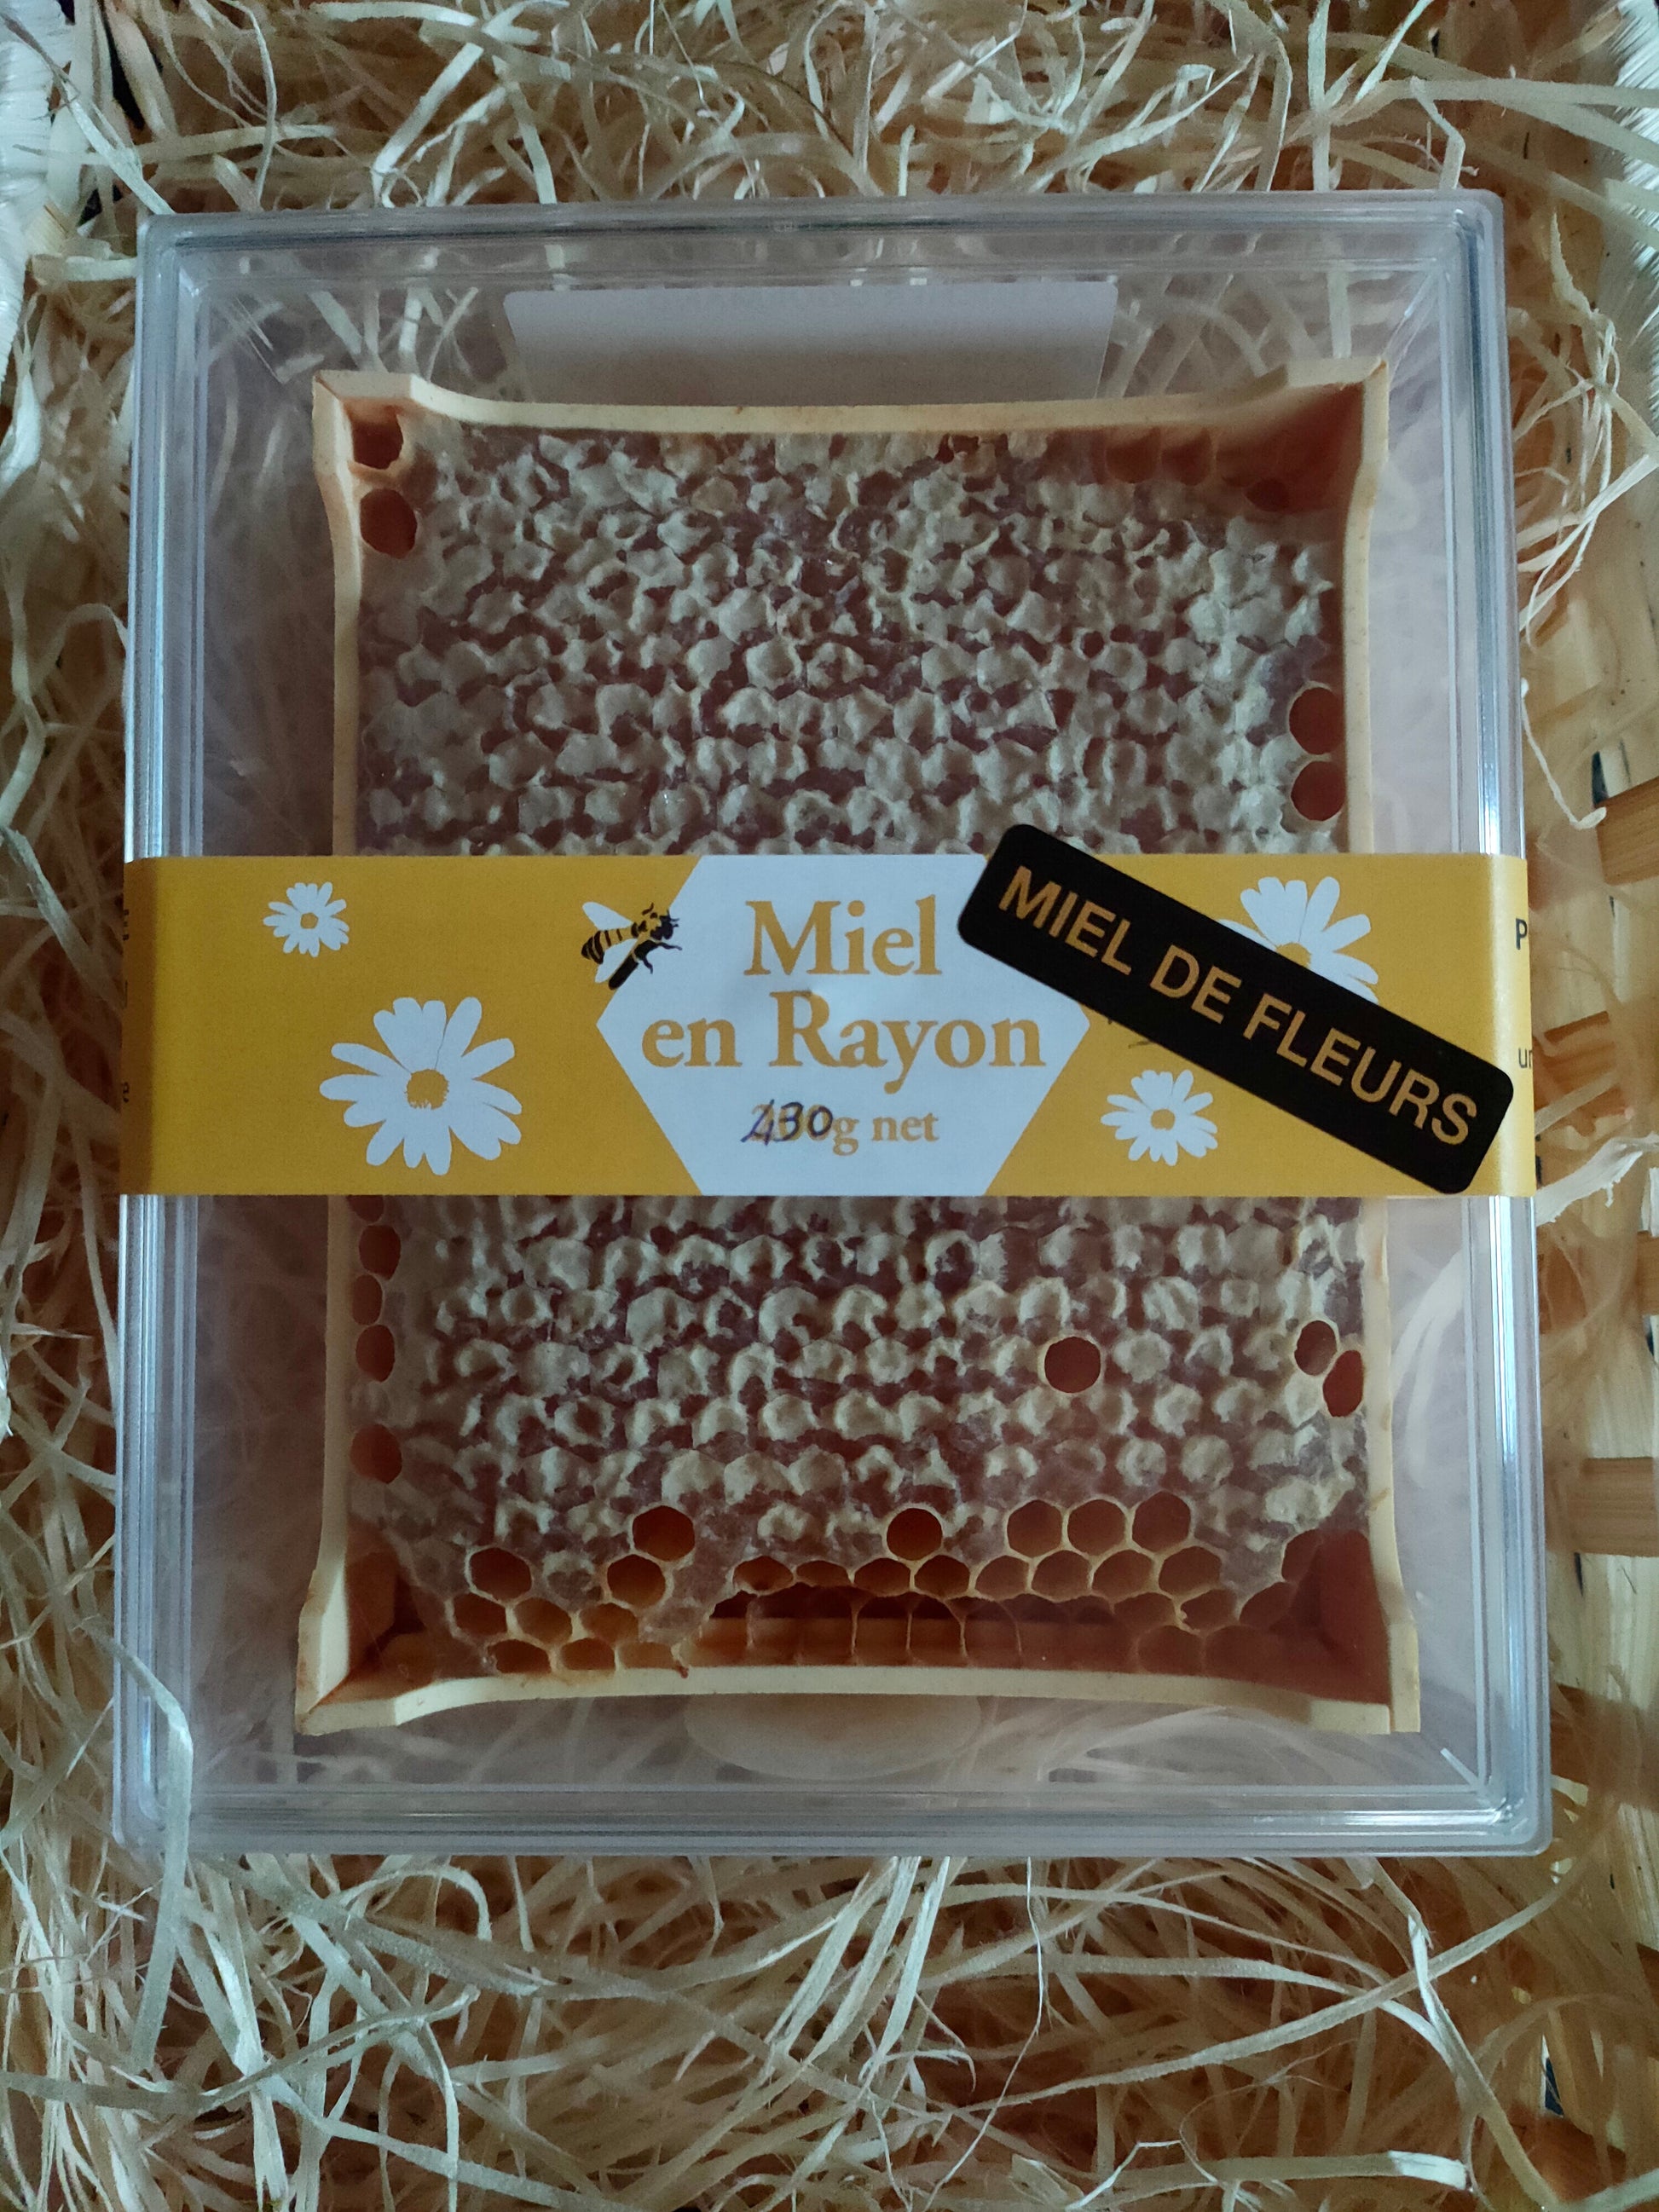 Miel de fleurs en rayon - 430g